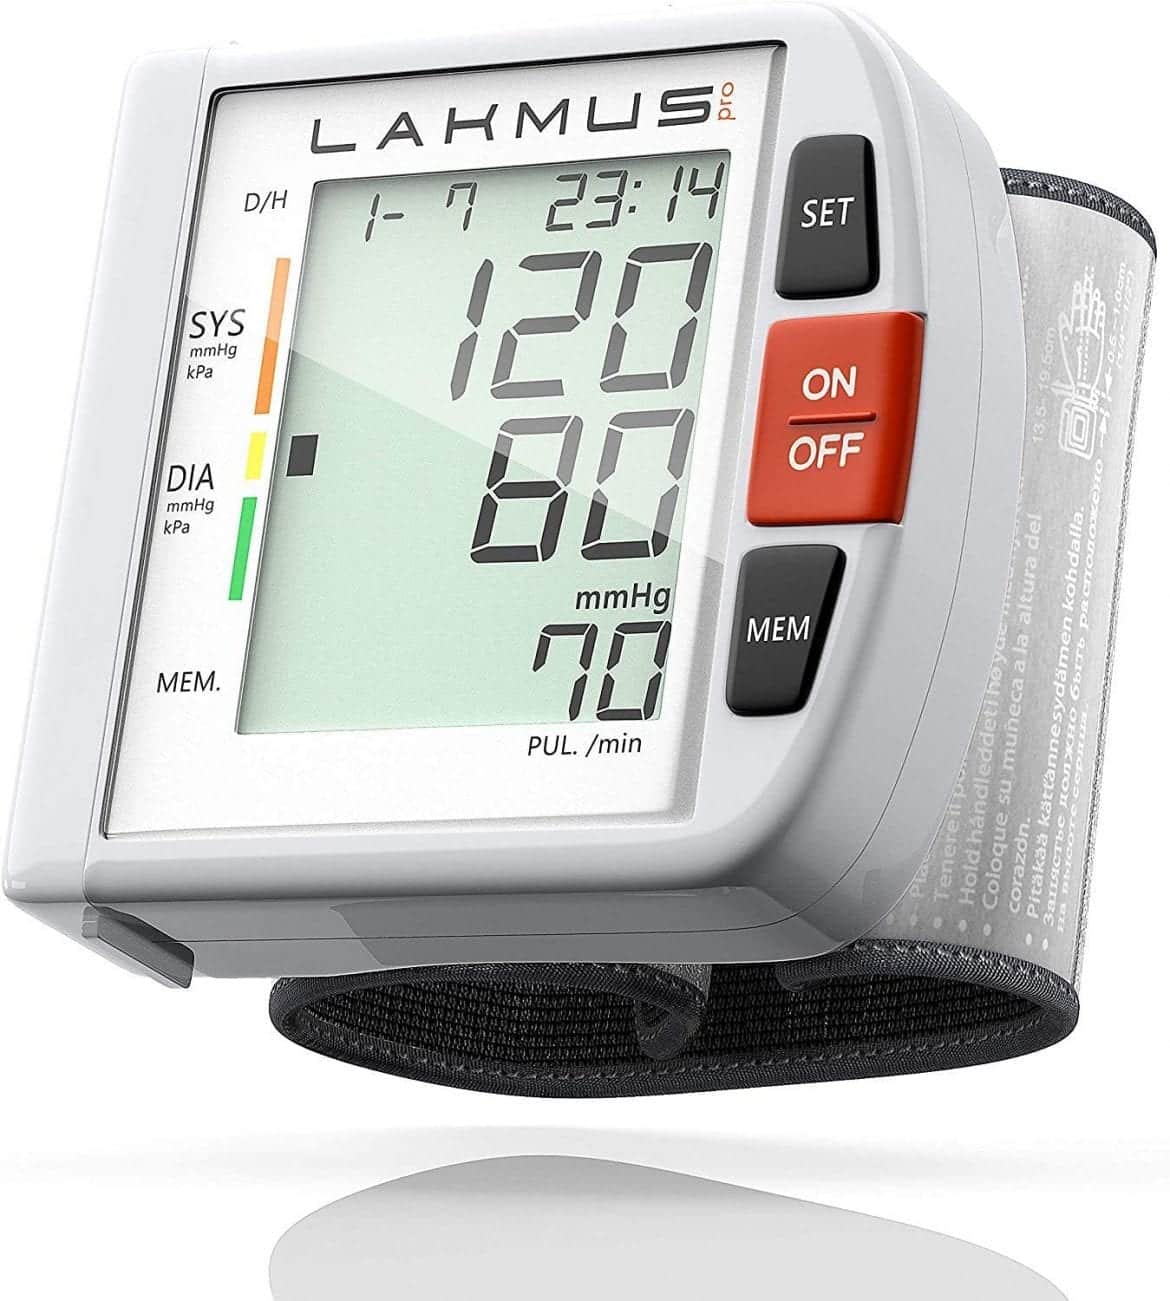 Top 10 Best Wrist Blood Pressure Monitors in 2020